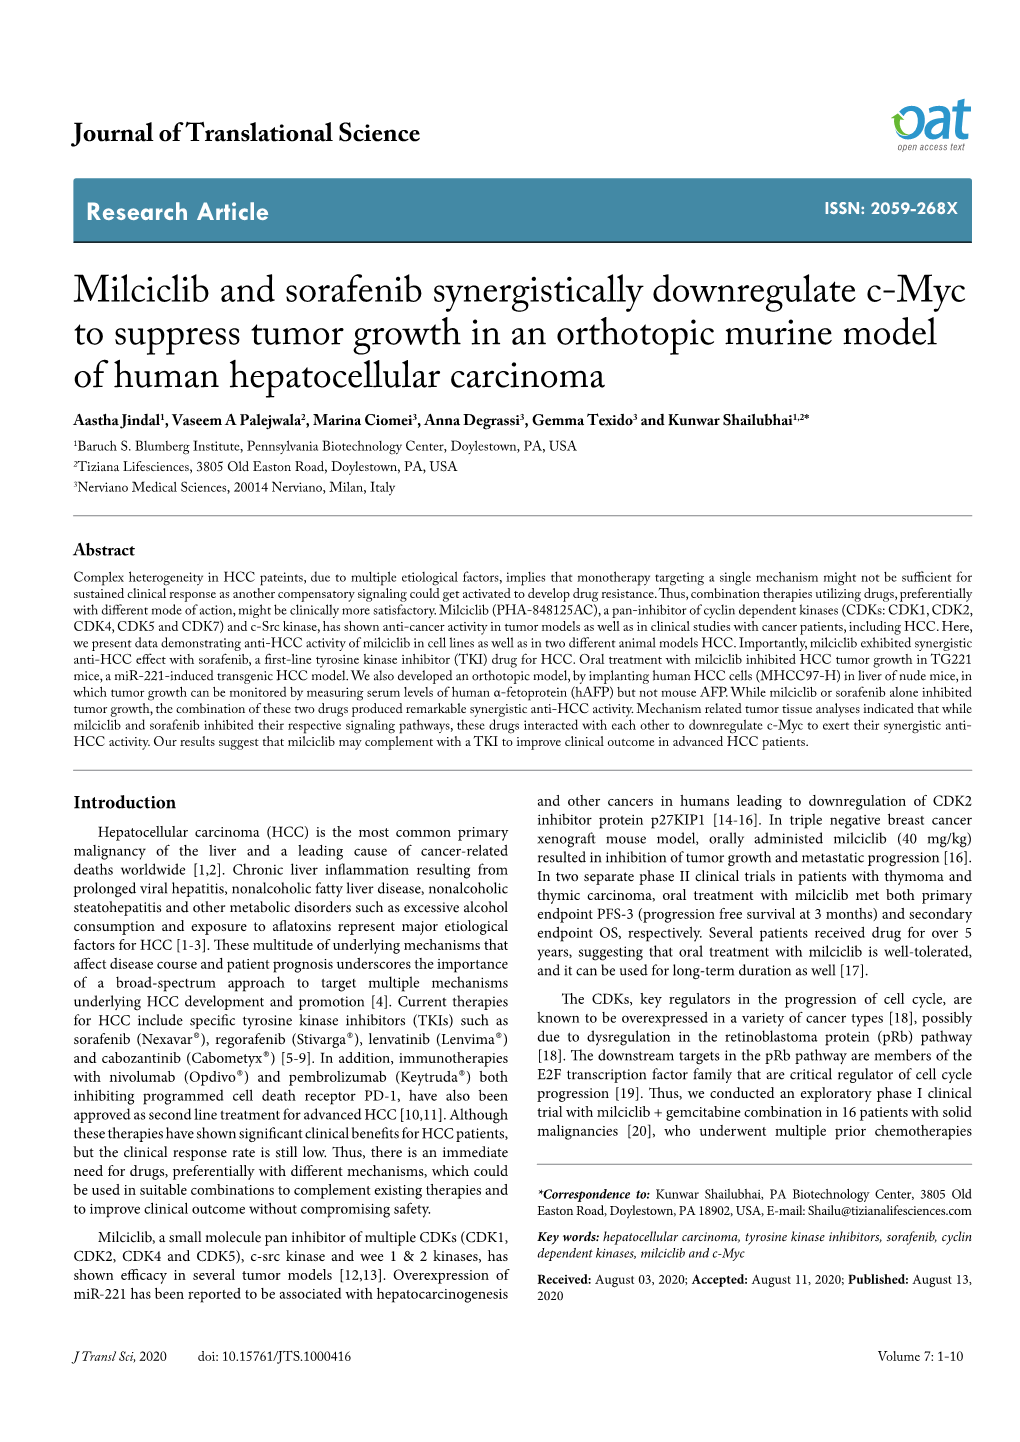 Milciclib and Sorafenib Synergistically Downregulate C-Myc to Suppress